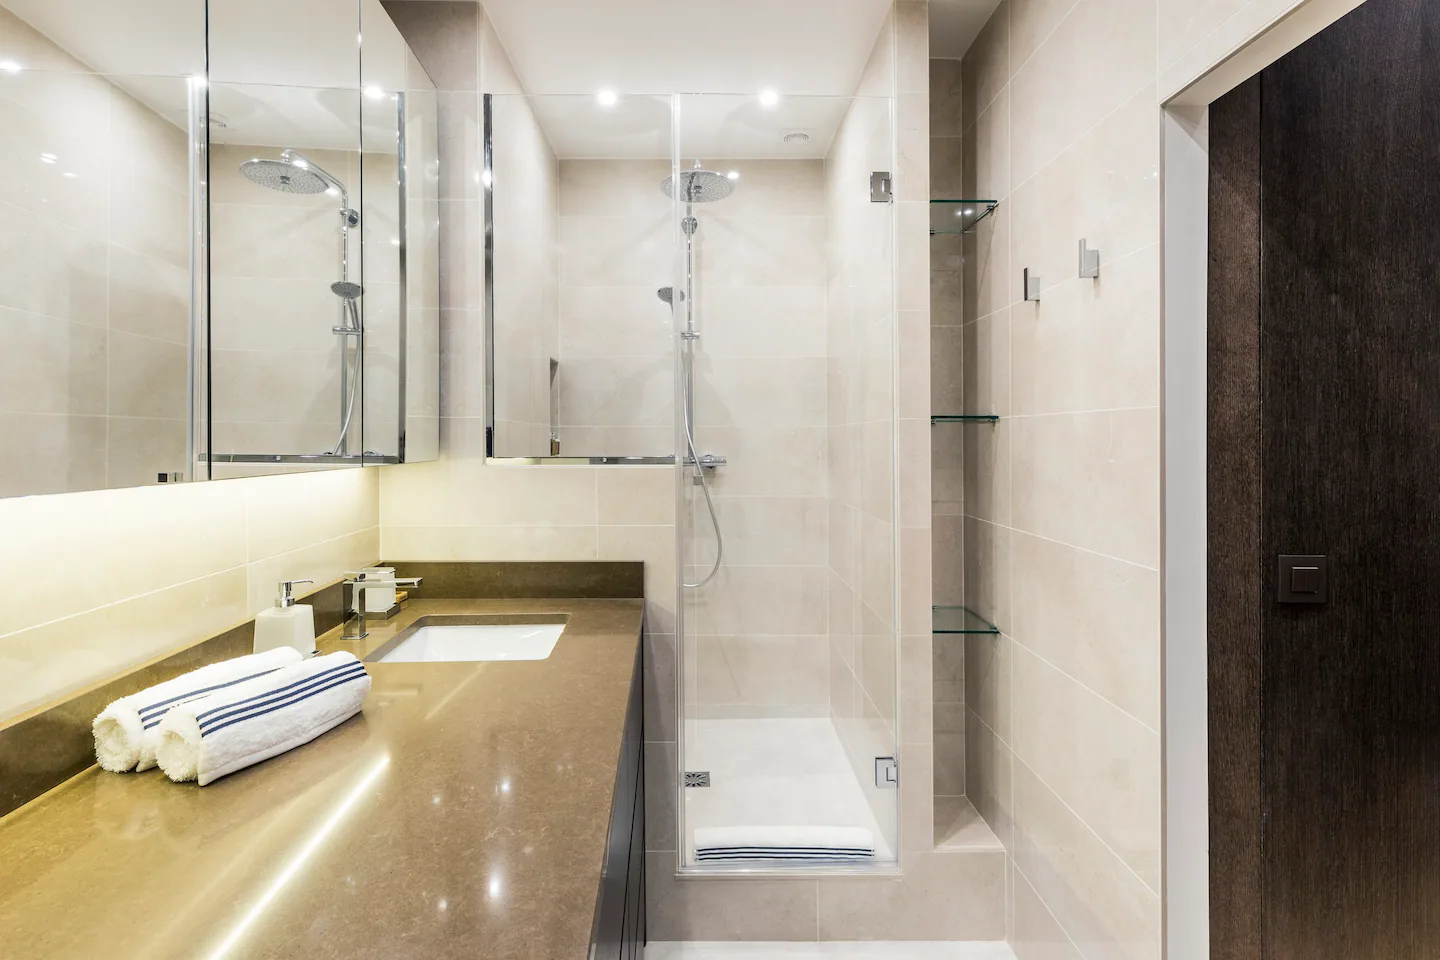 Bathroom features: sink, shower, toilet, shelves, tiled floor.